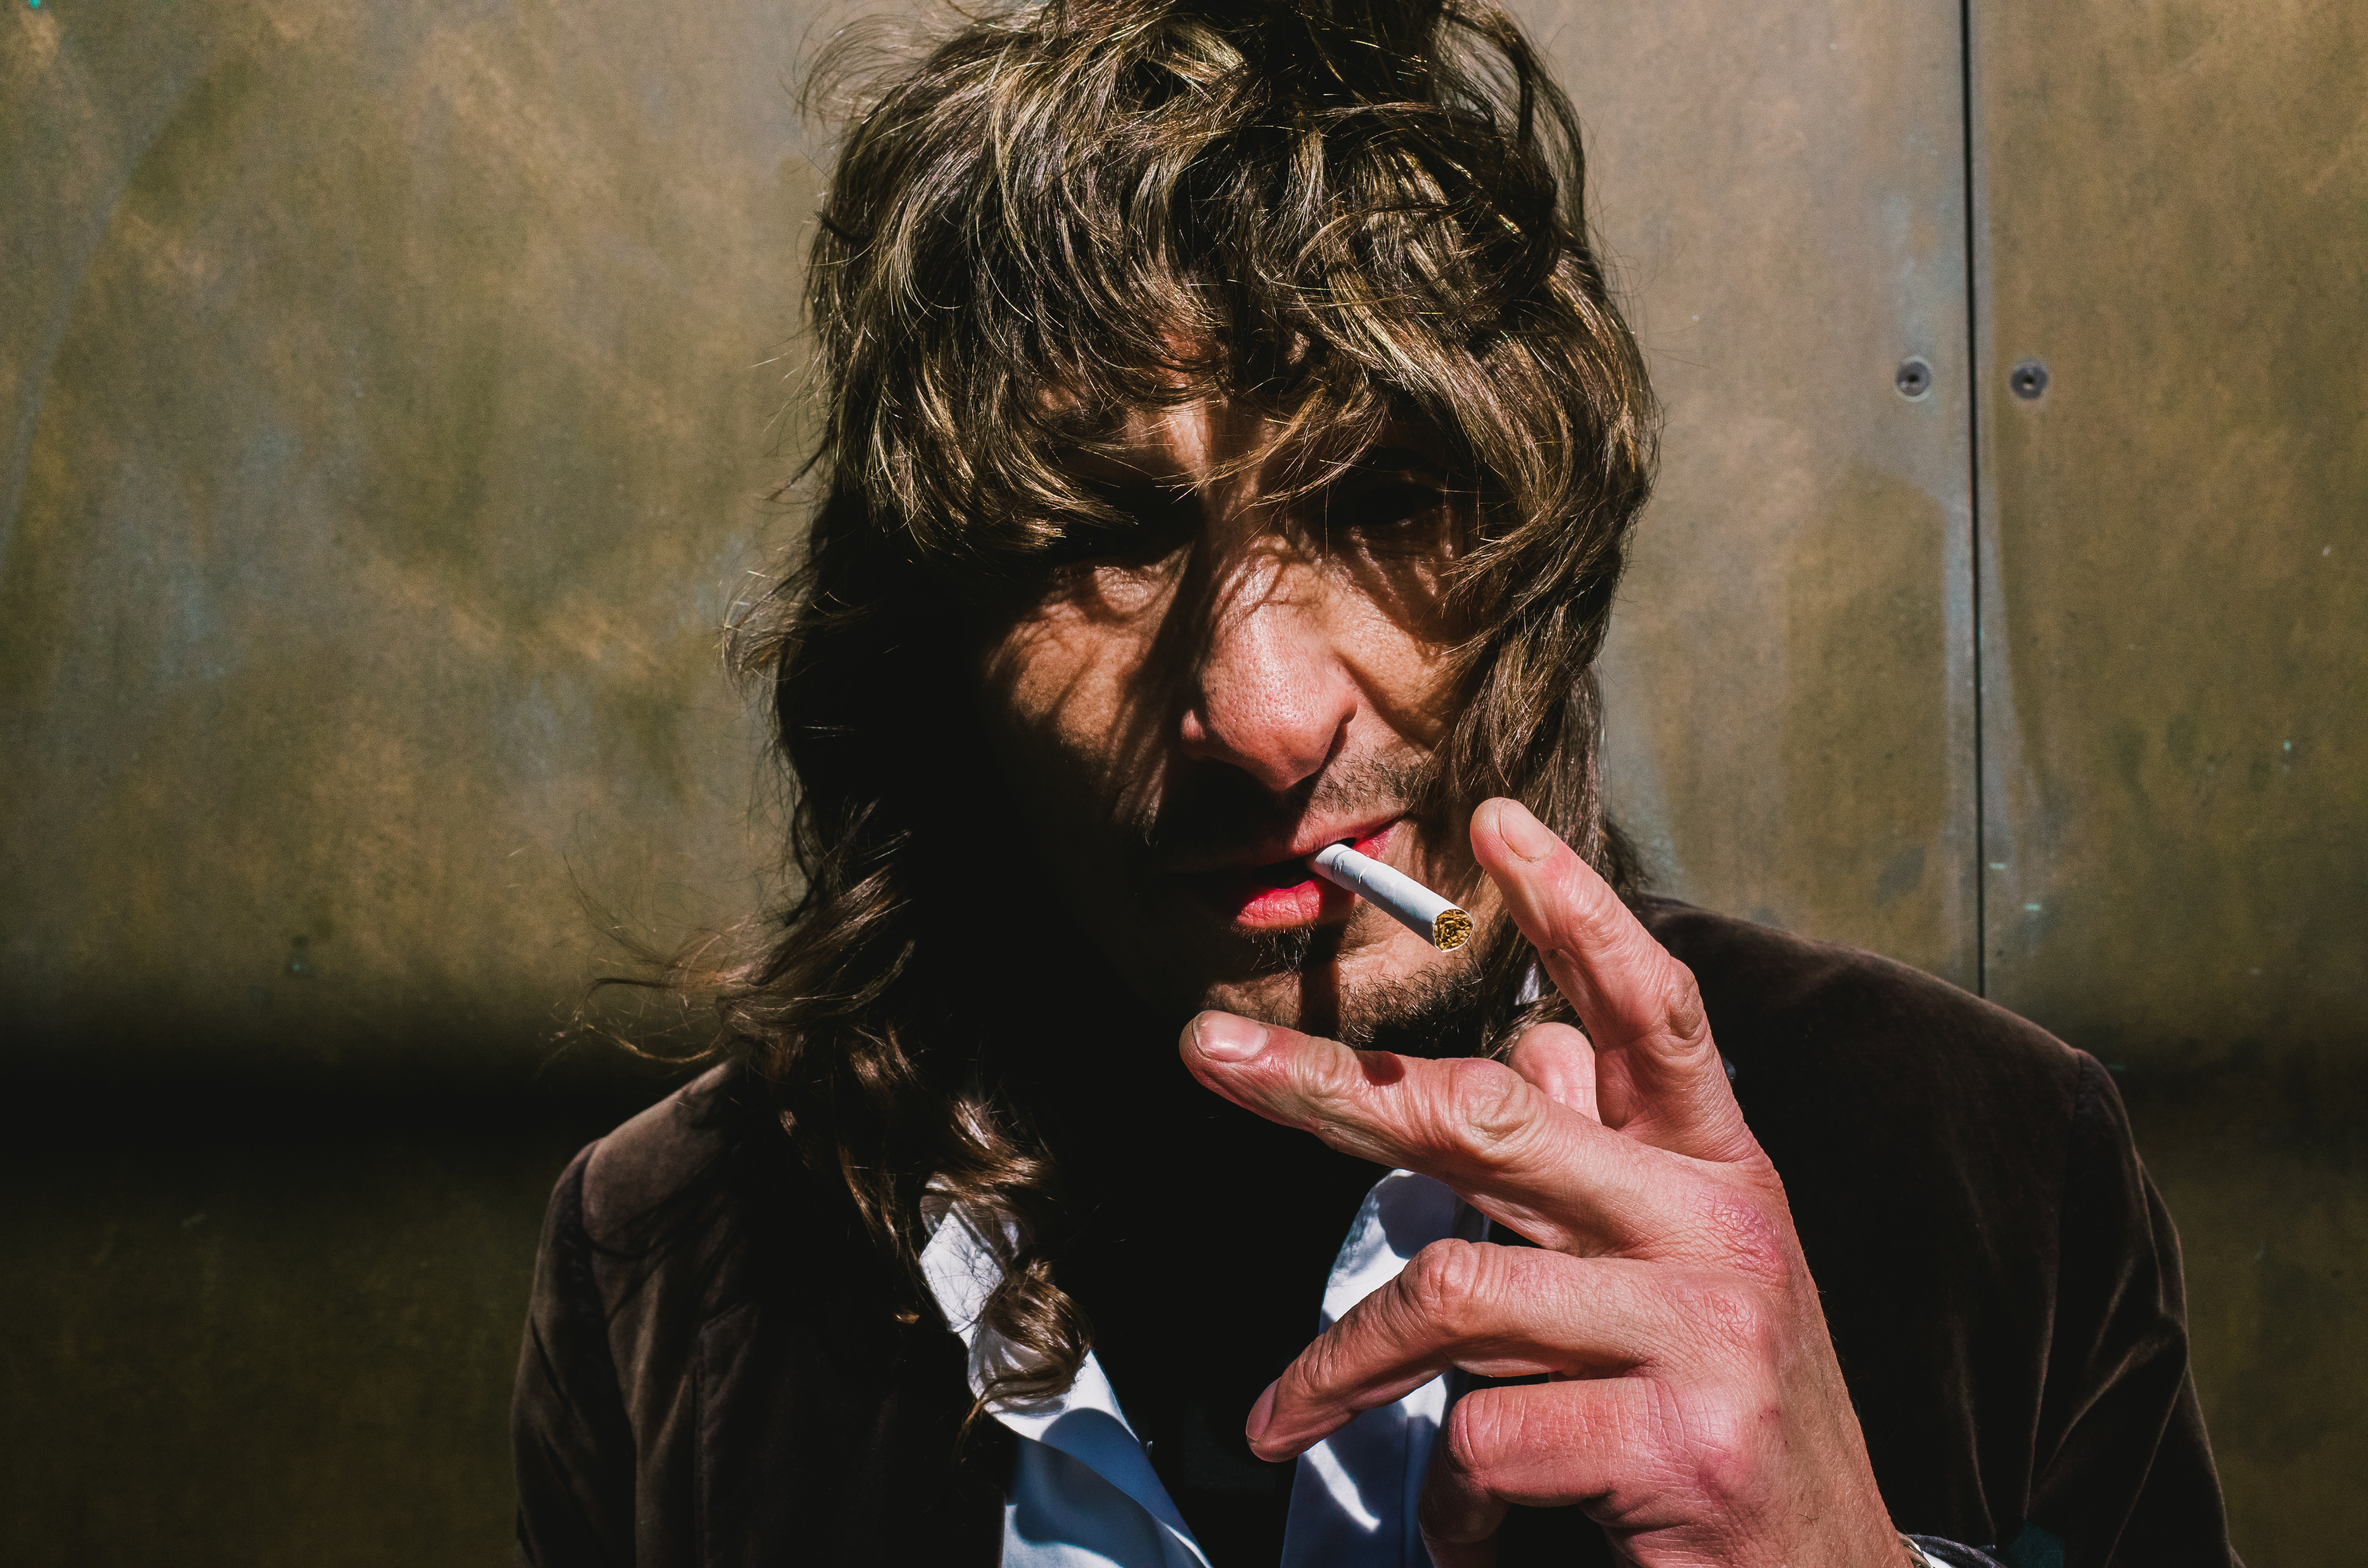 Man with cigarette. Toronto, 2015